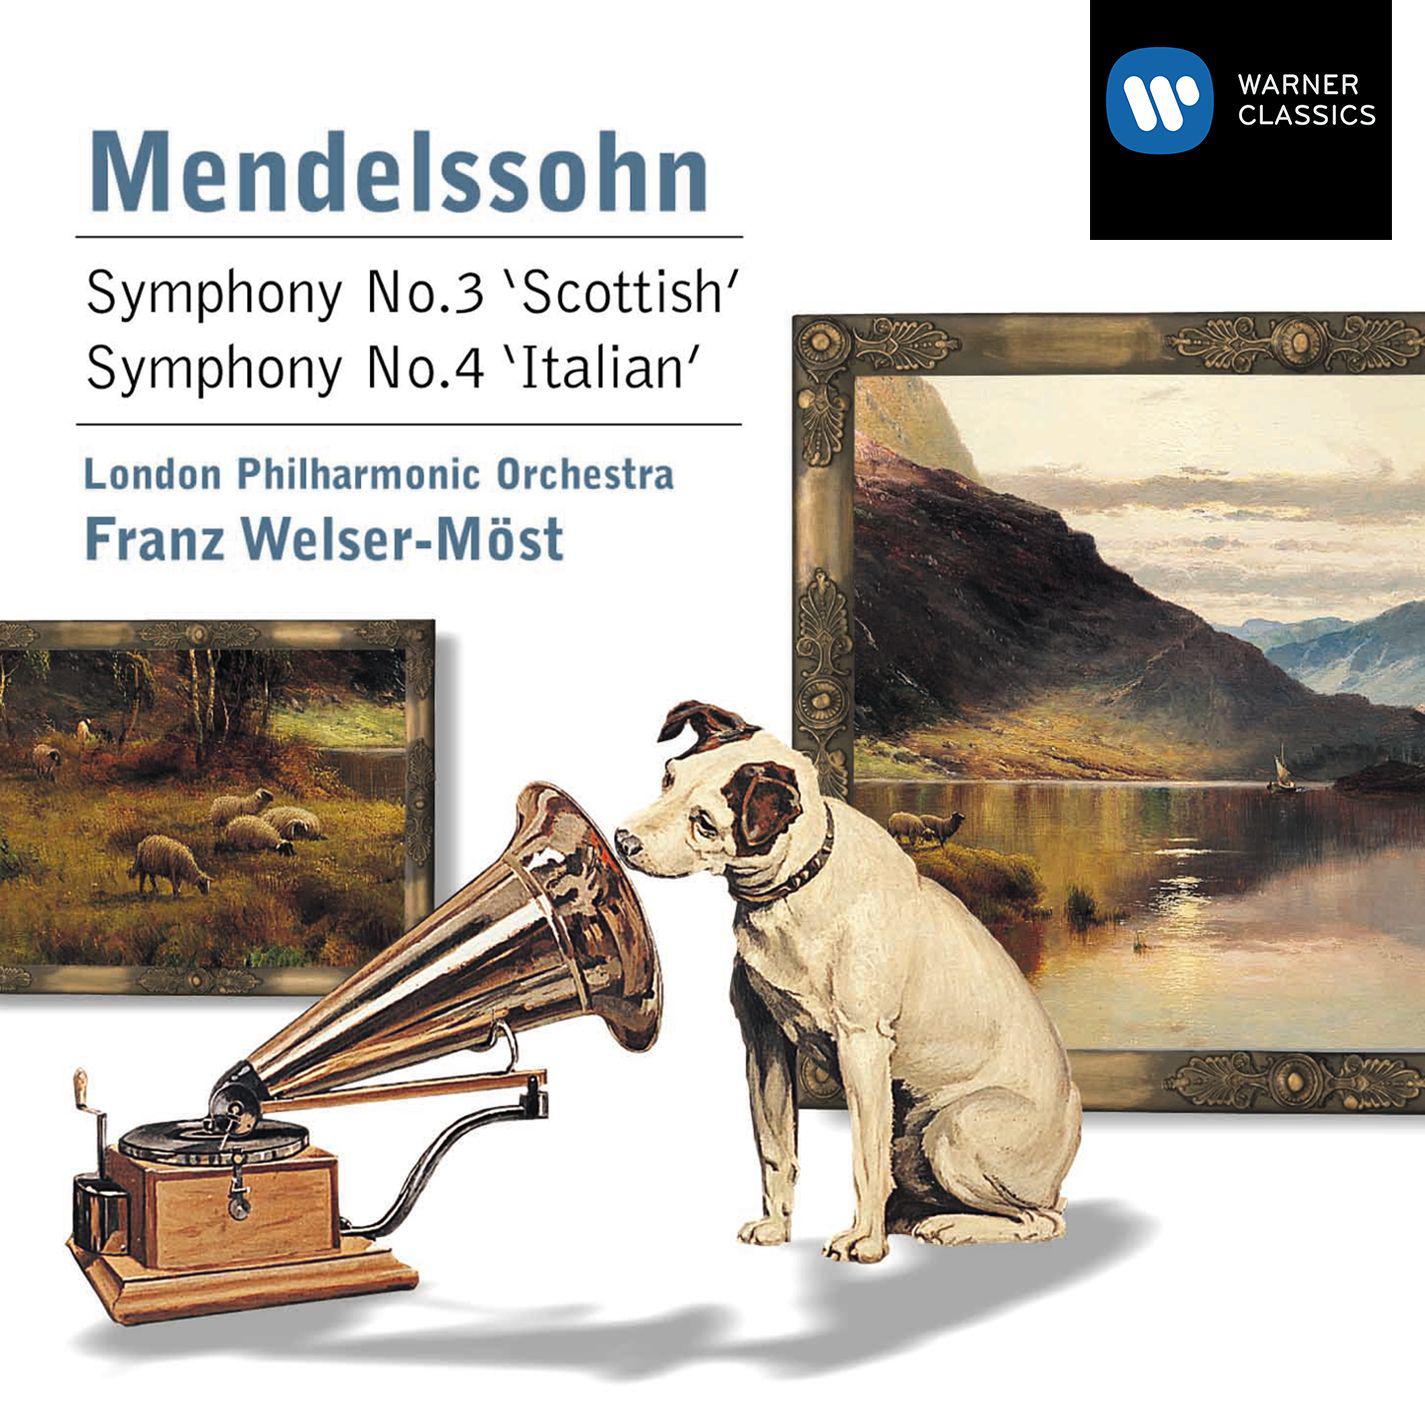 Symphony No. 3 in A Minor, Op. 56 MWV, Scottish, IV. Allegro maestoso assai